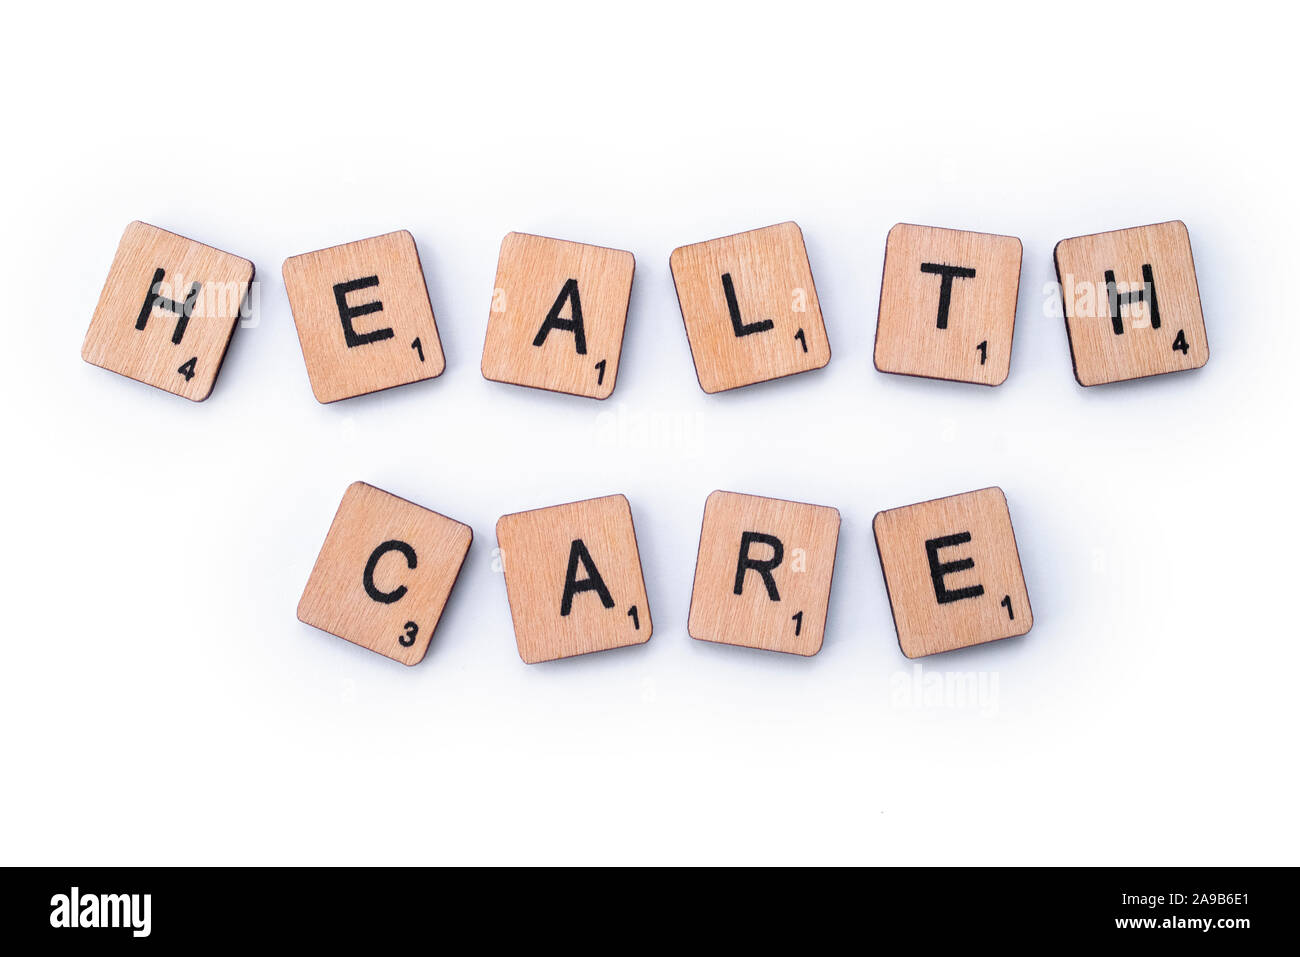 London, UK - February 6th 2019: HEALTH CARE, spelt with wooden letter tiles. Stock Photo